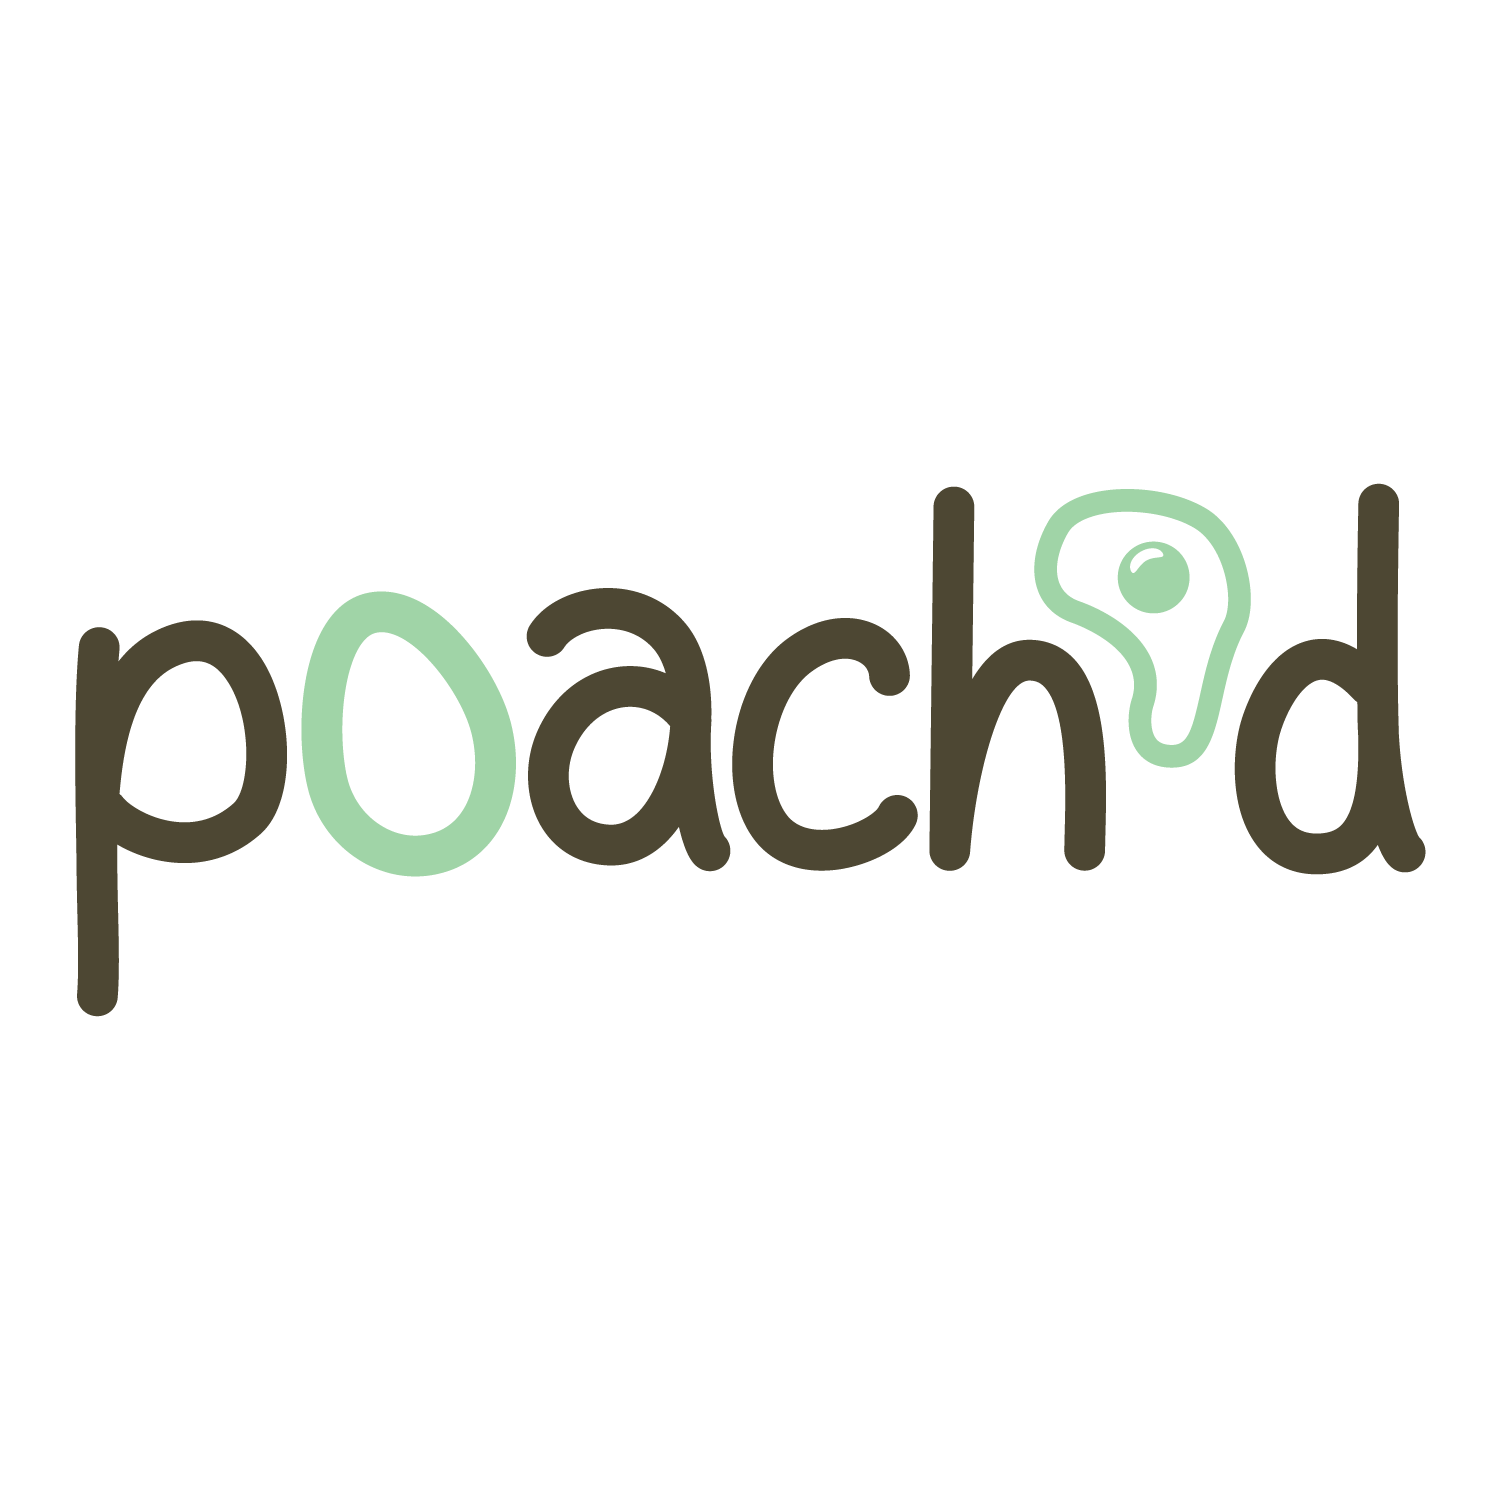 poach'd-02.png